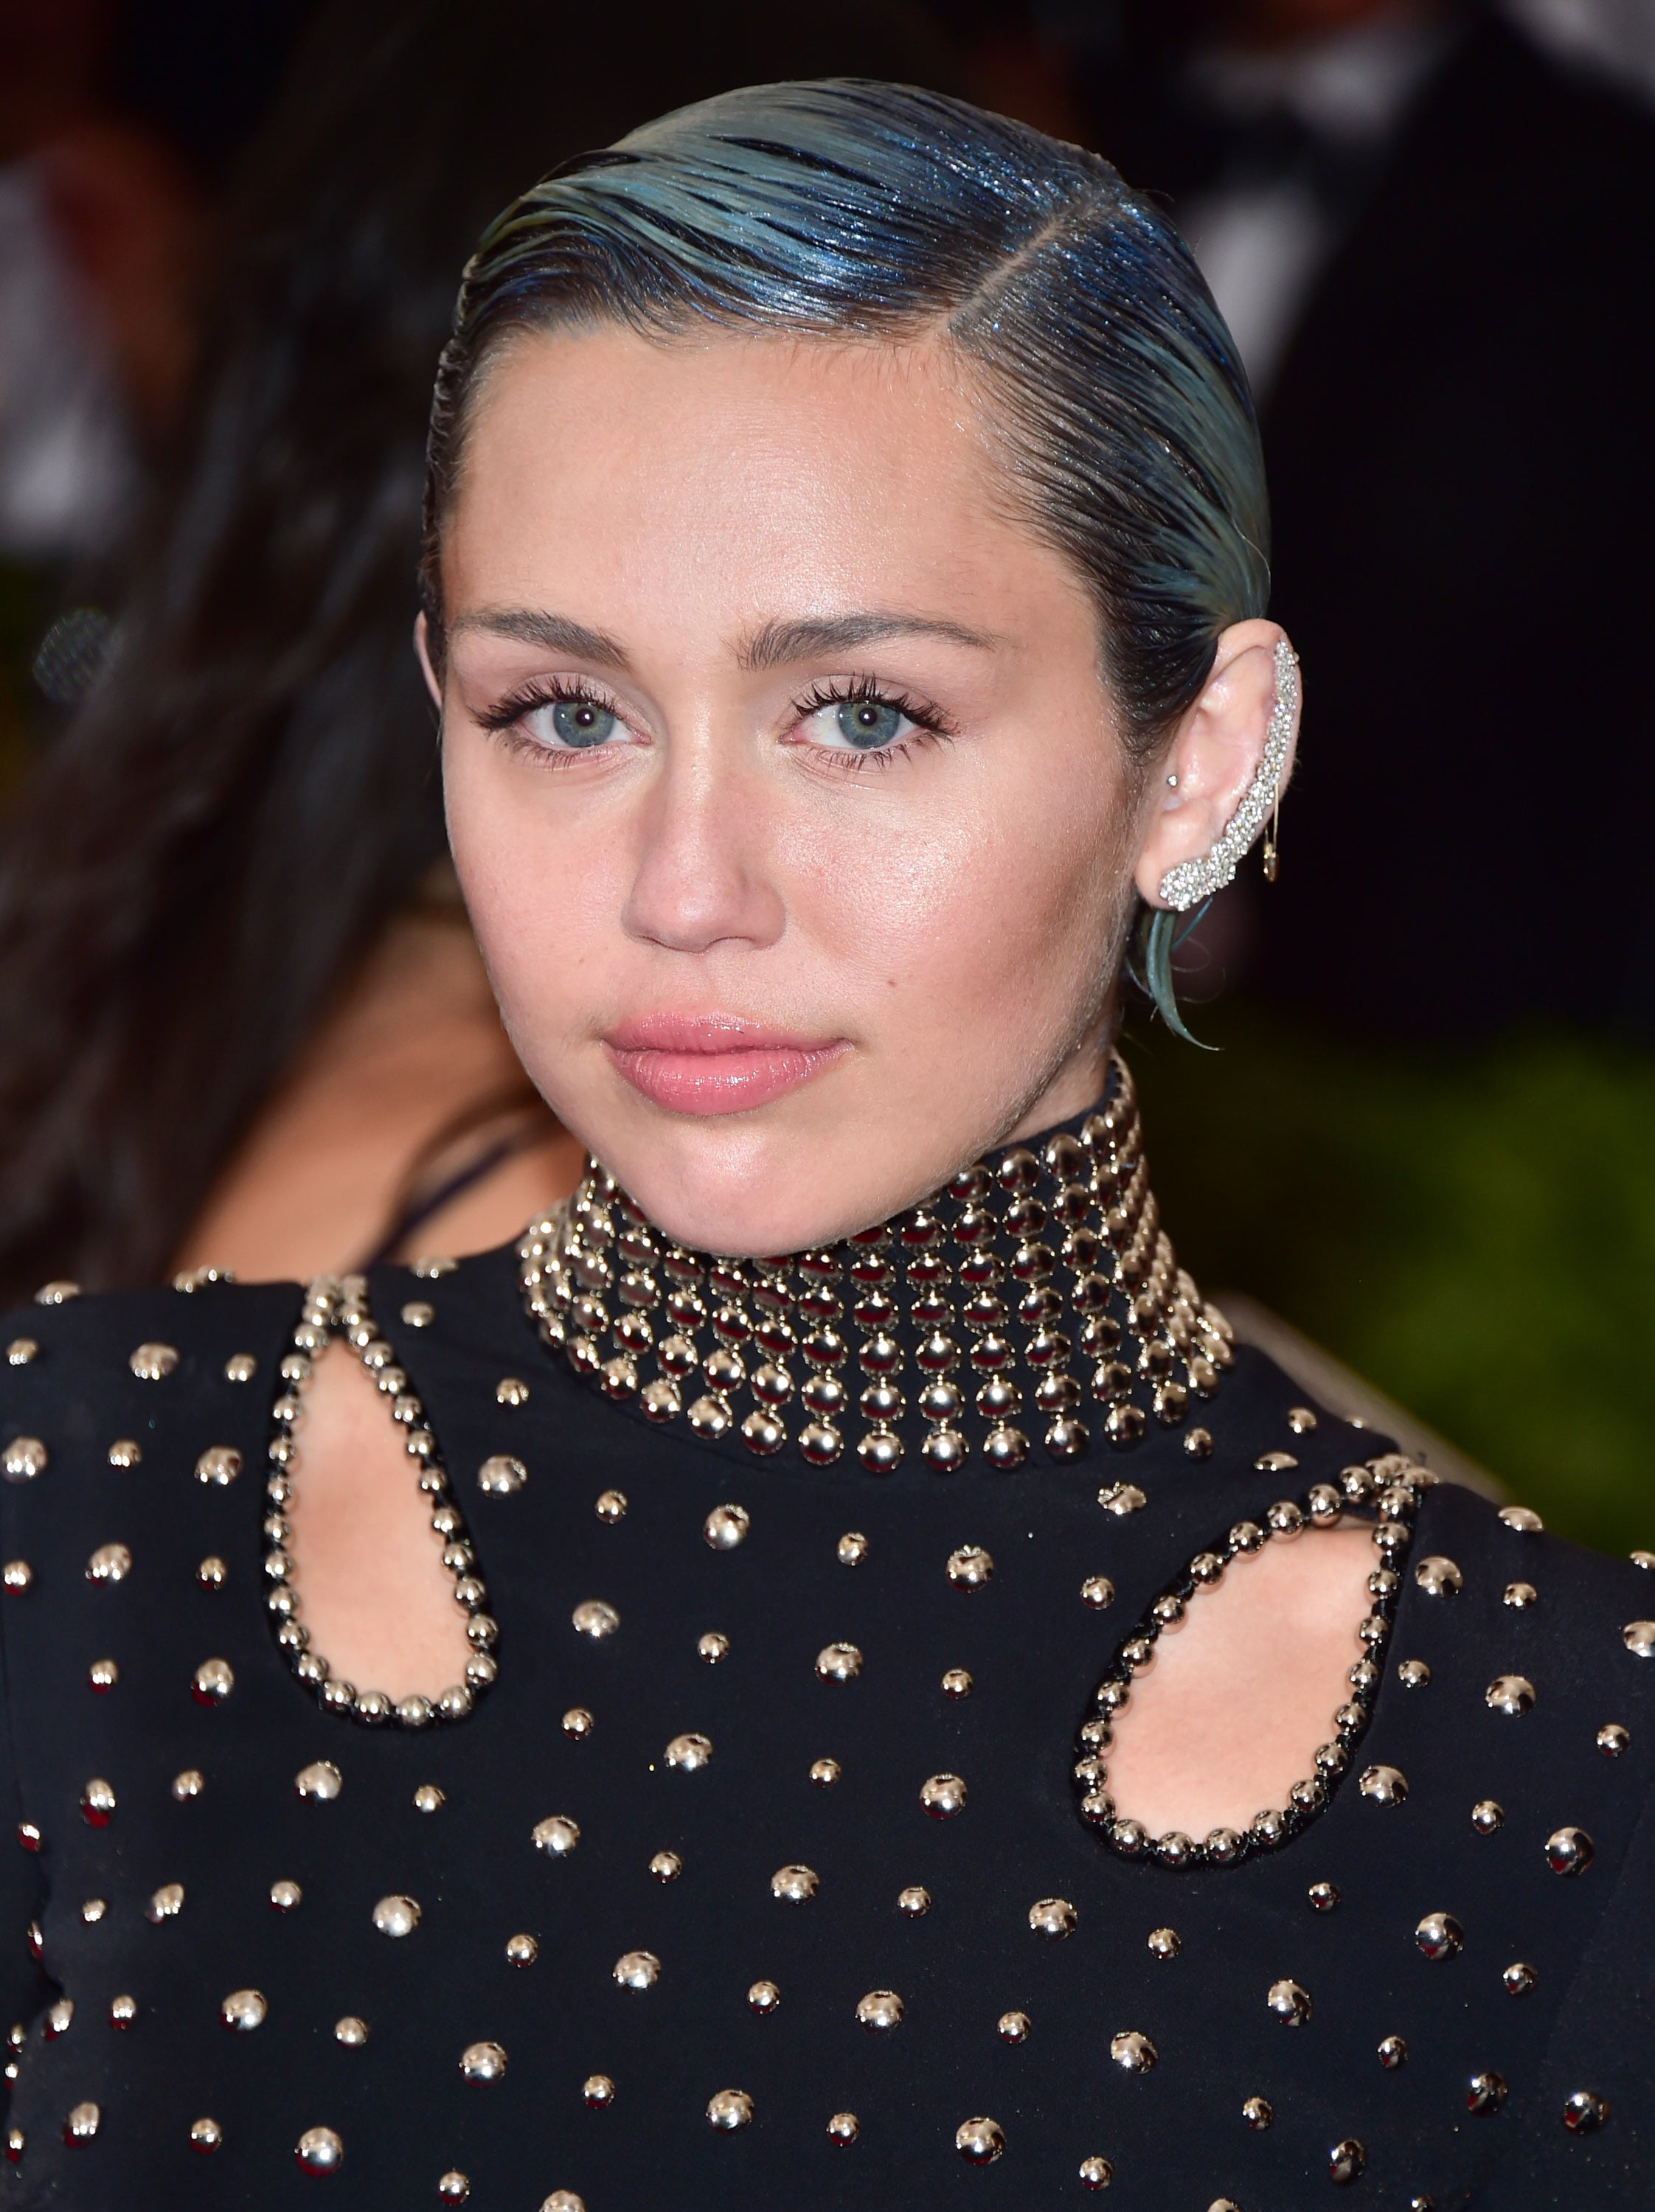 Miley Cyrus unveils bold brunette hair transformation